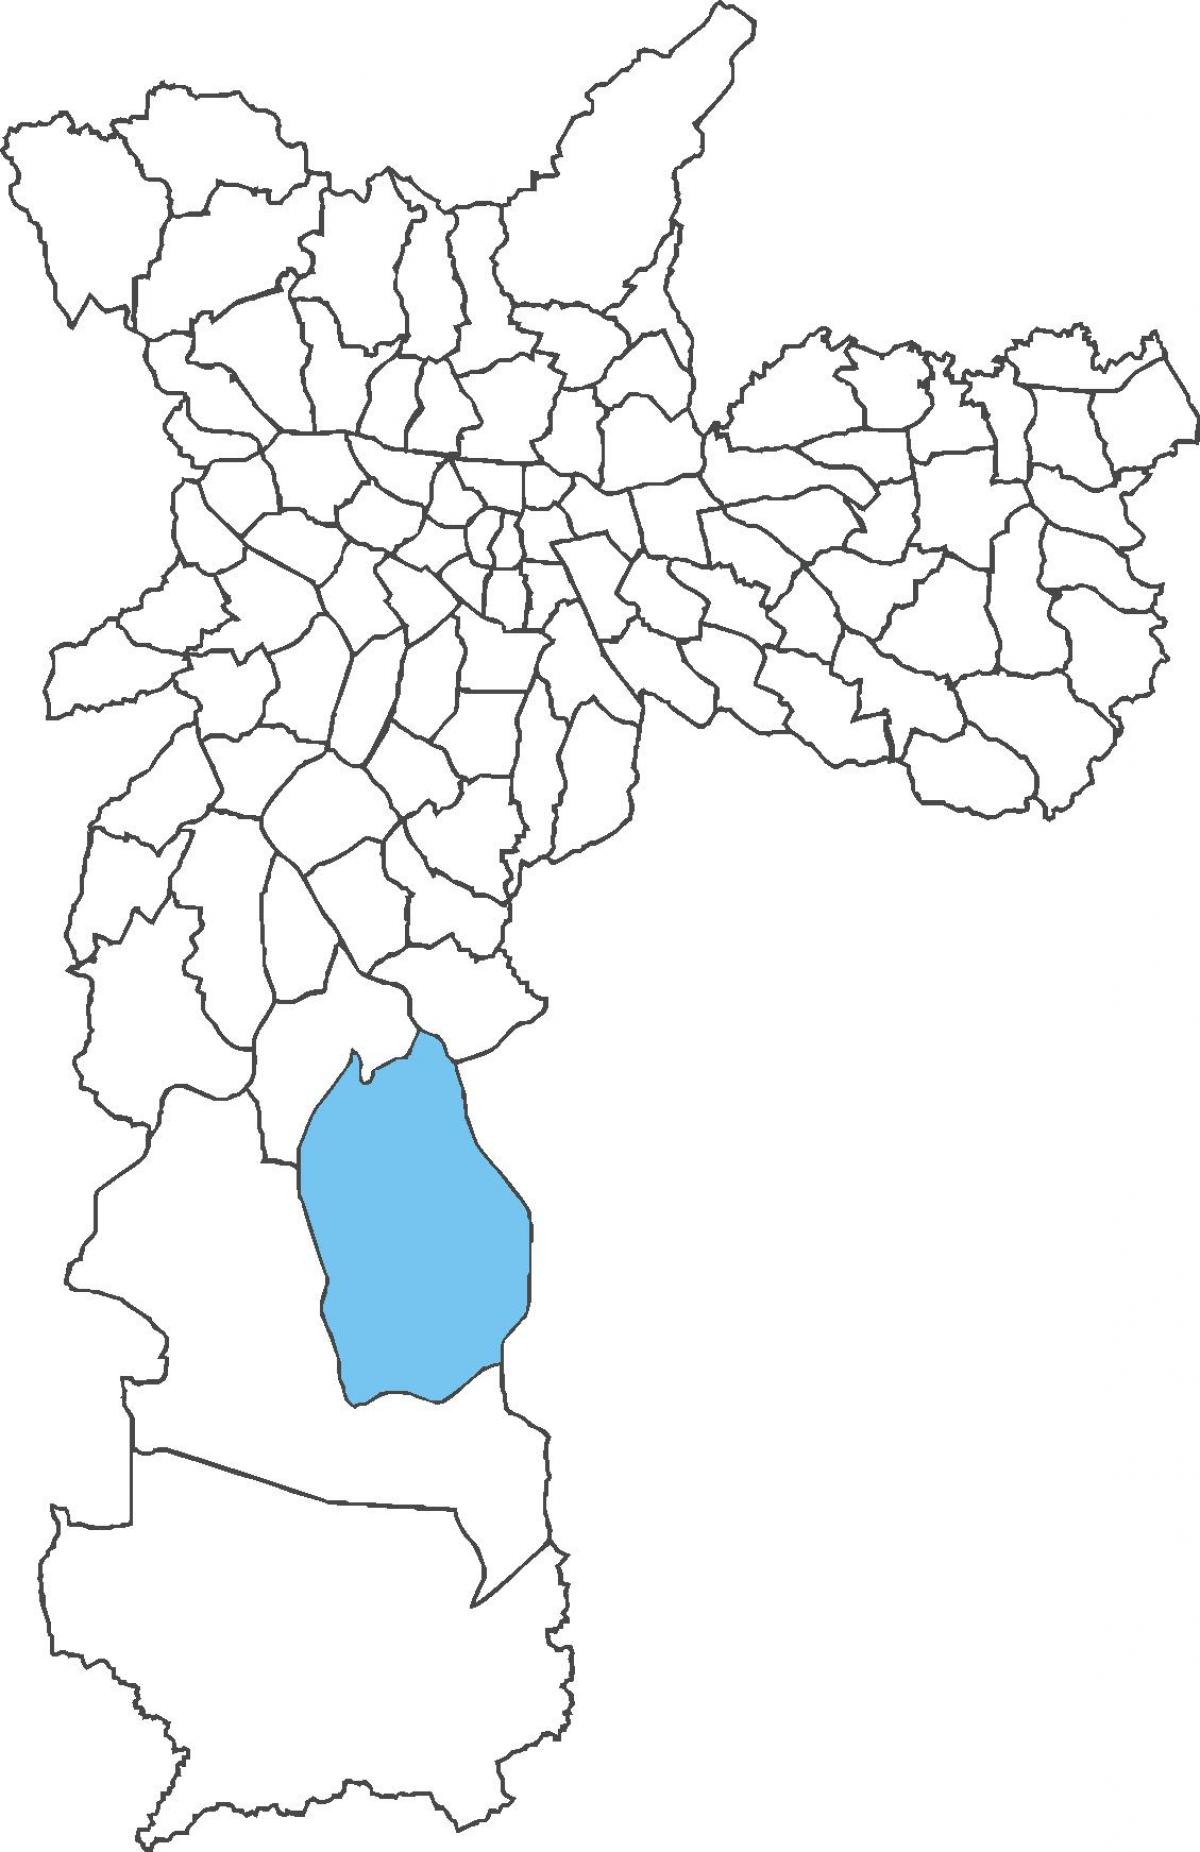 Mapa do distrito do Grajaú